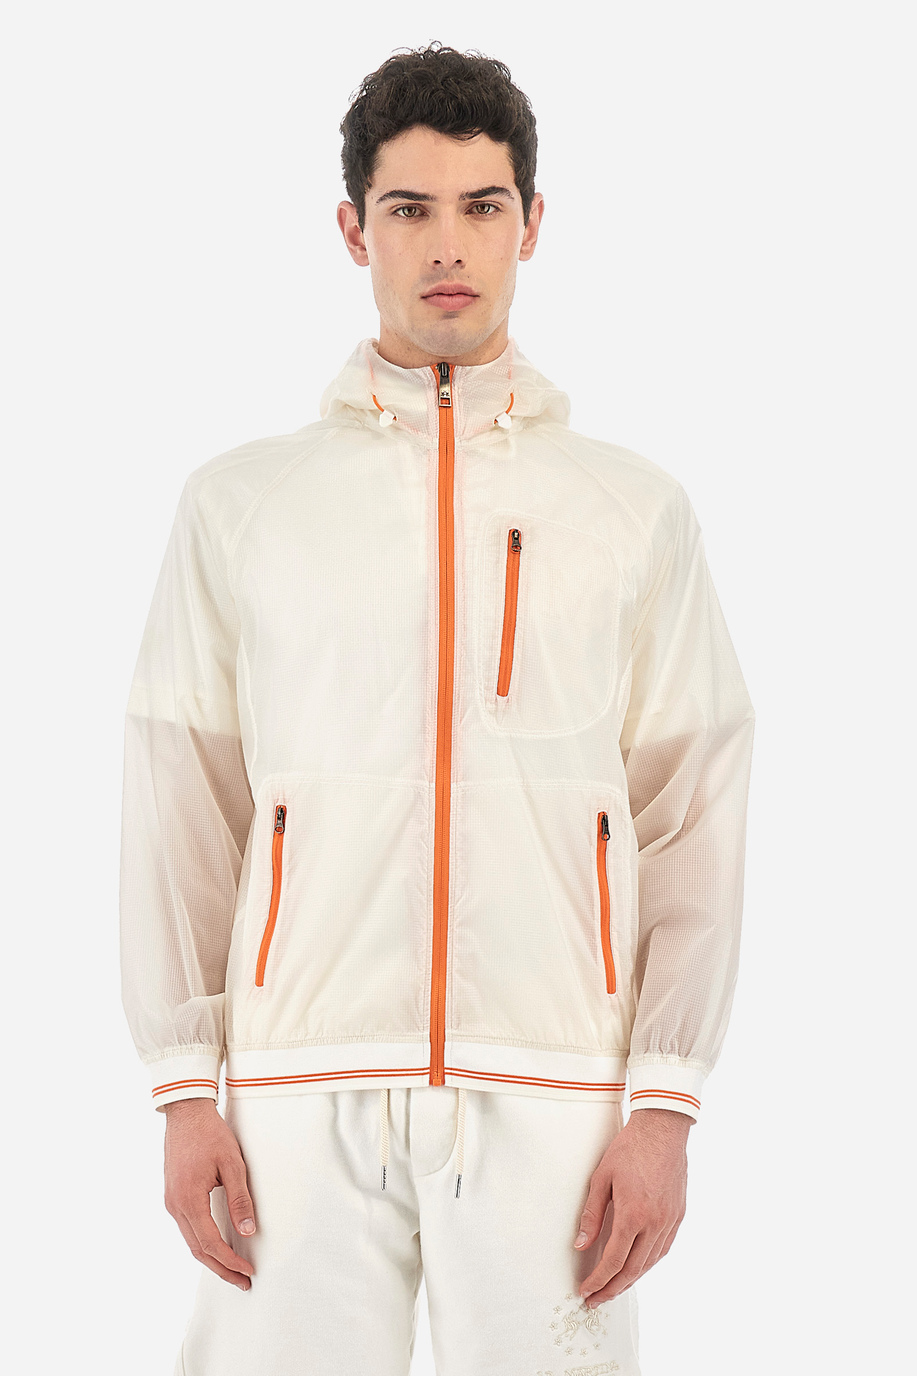 Regular fit solid color bomber jacket for men - Velichko - Gerard Loft X La Martina | La Martina - Official Online Shop